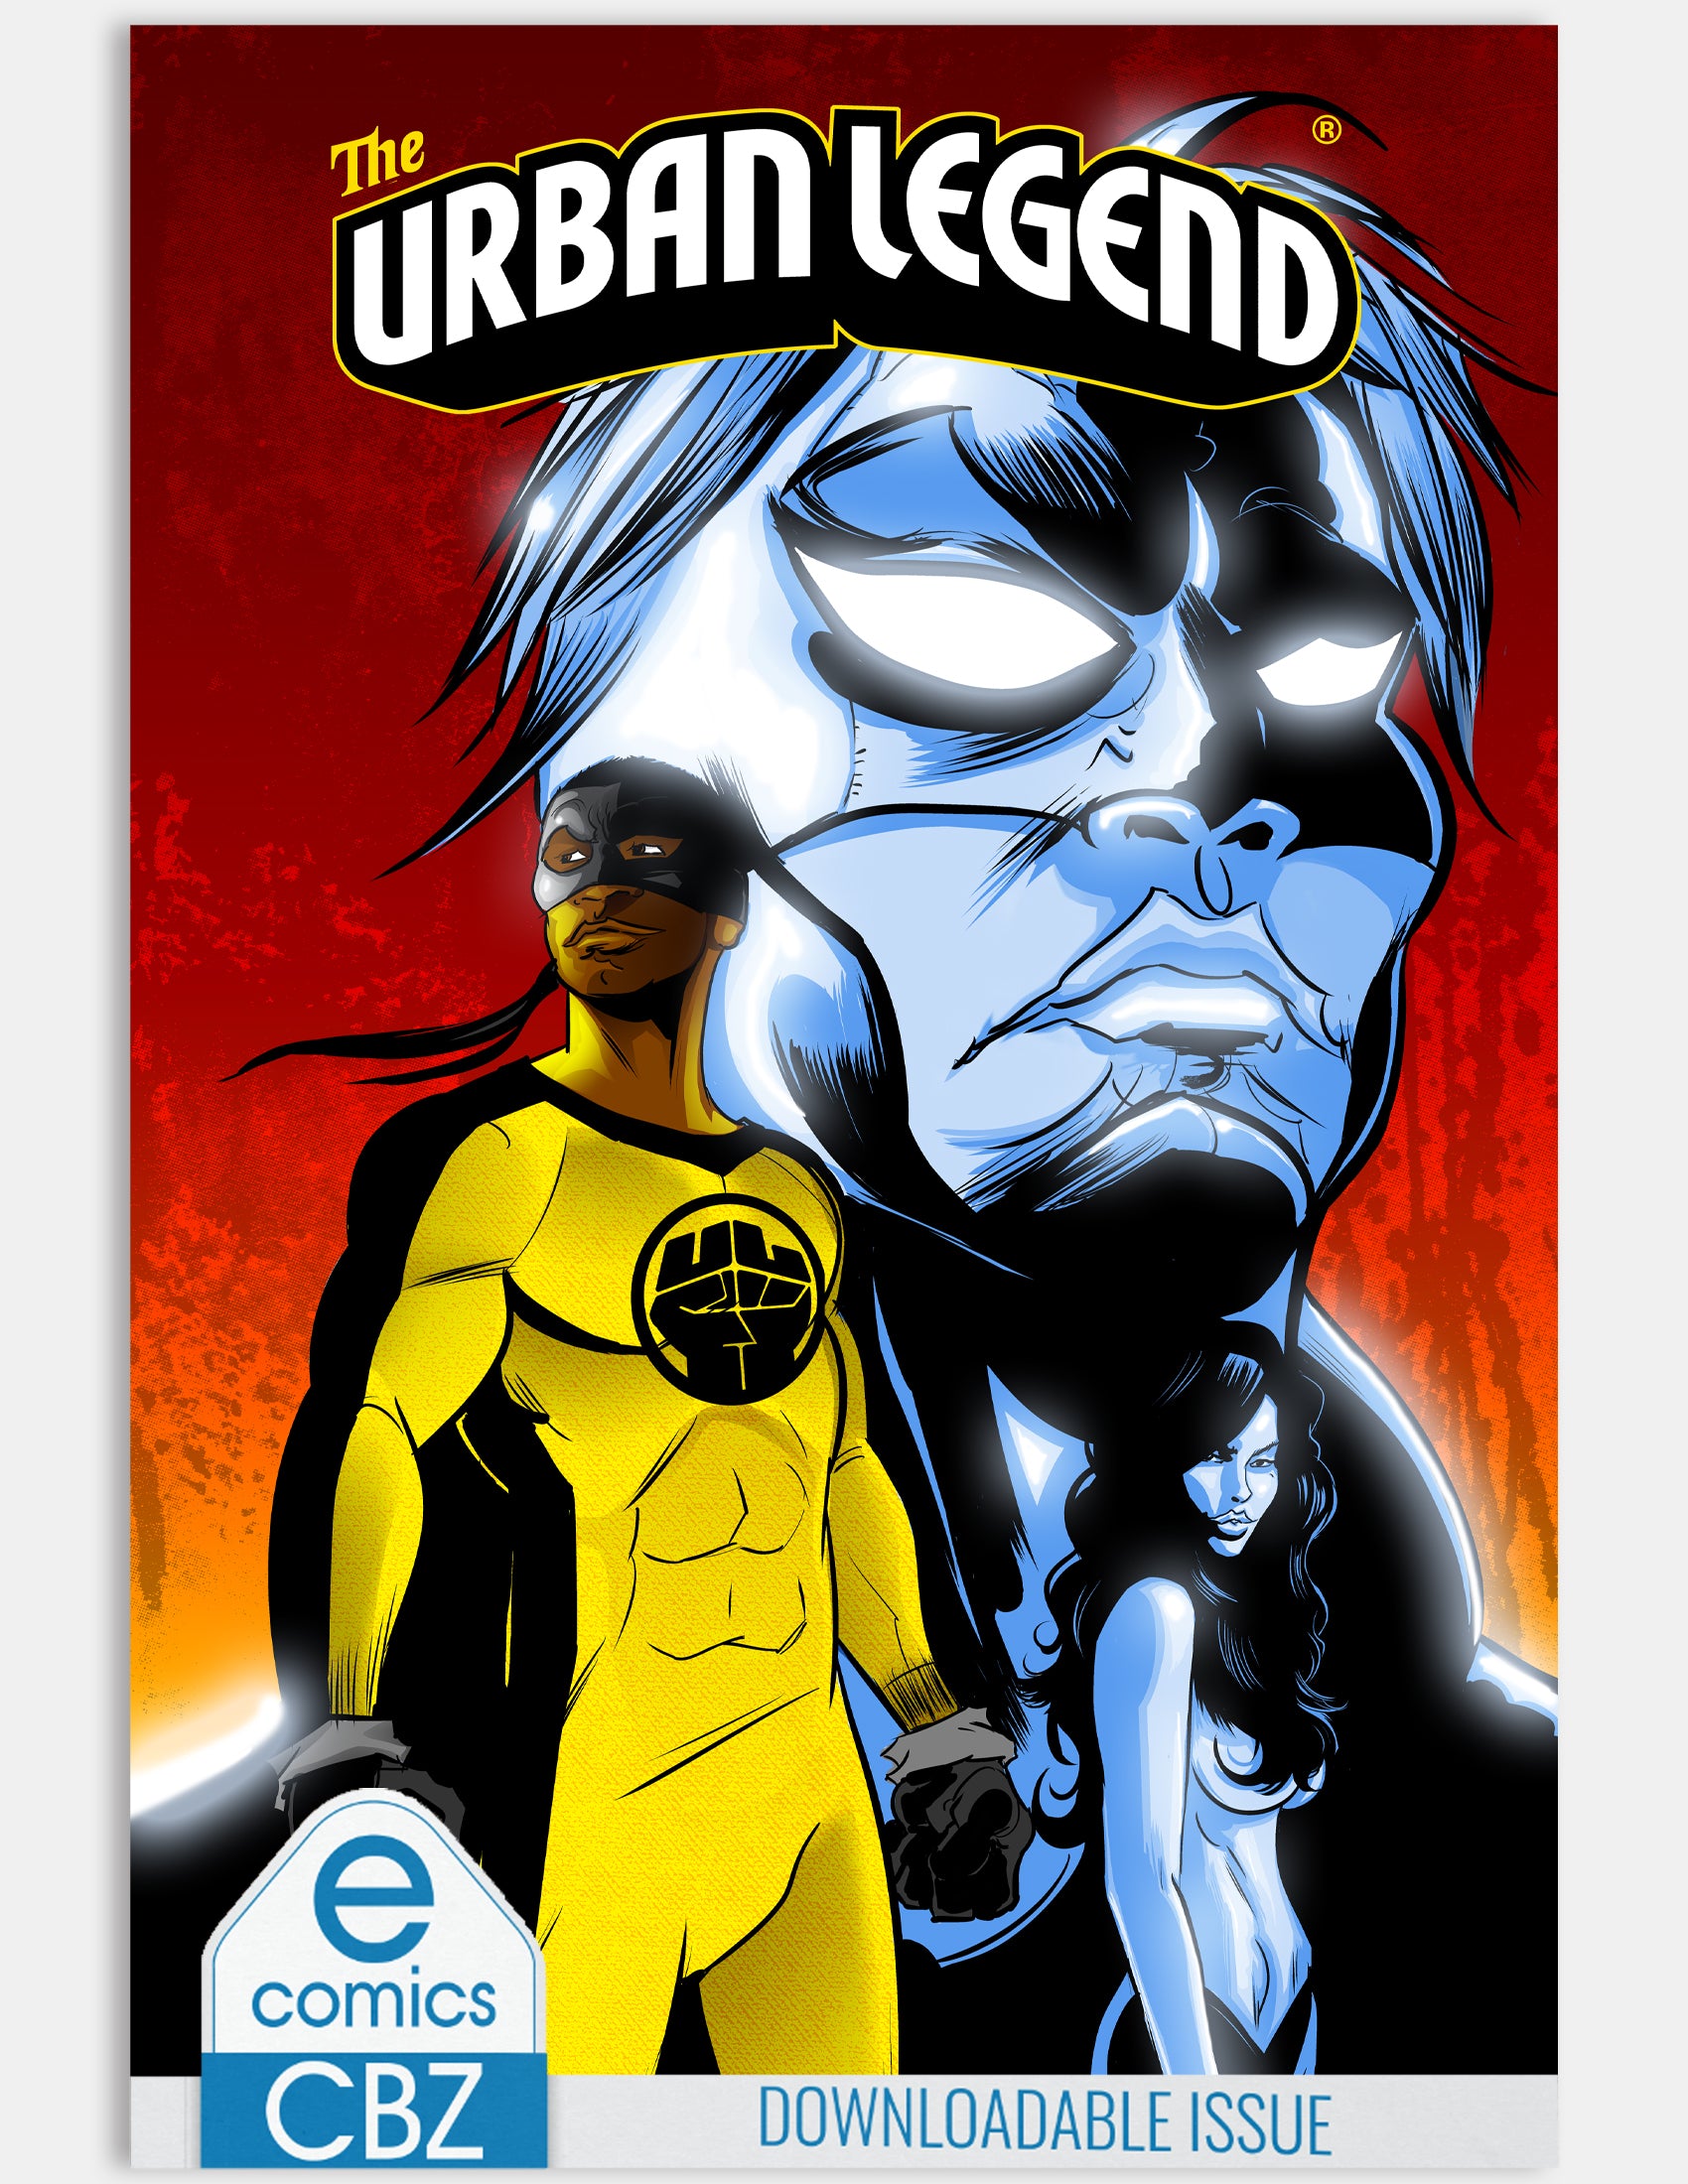 The Urban Legend - Rise of the Myth (Issue 2 - Season 2) - Digital Issue